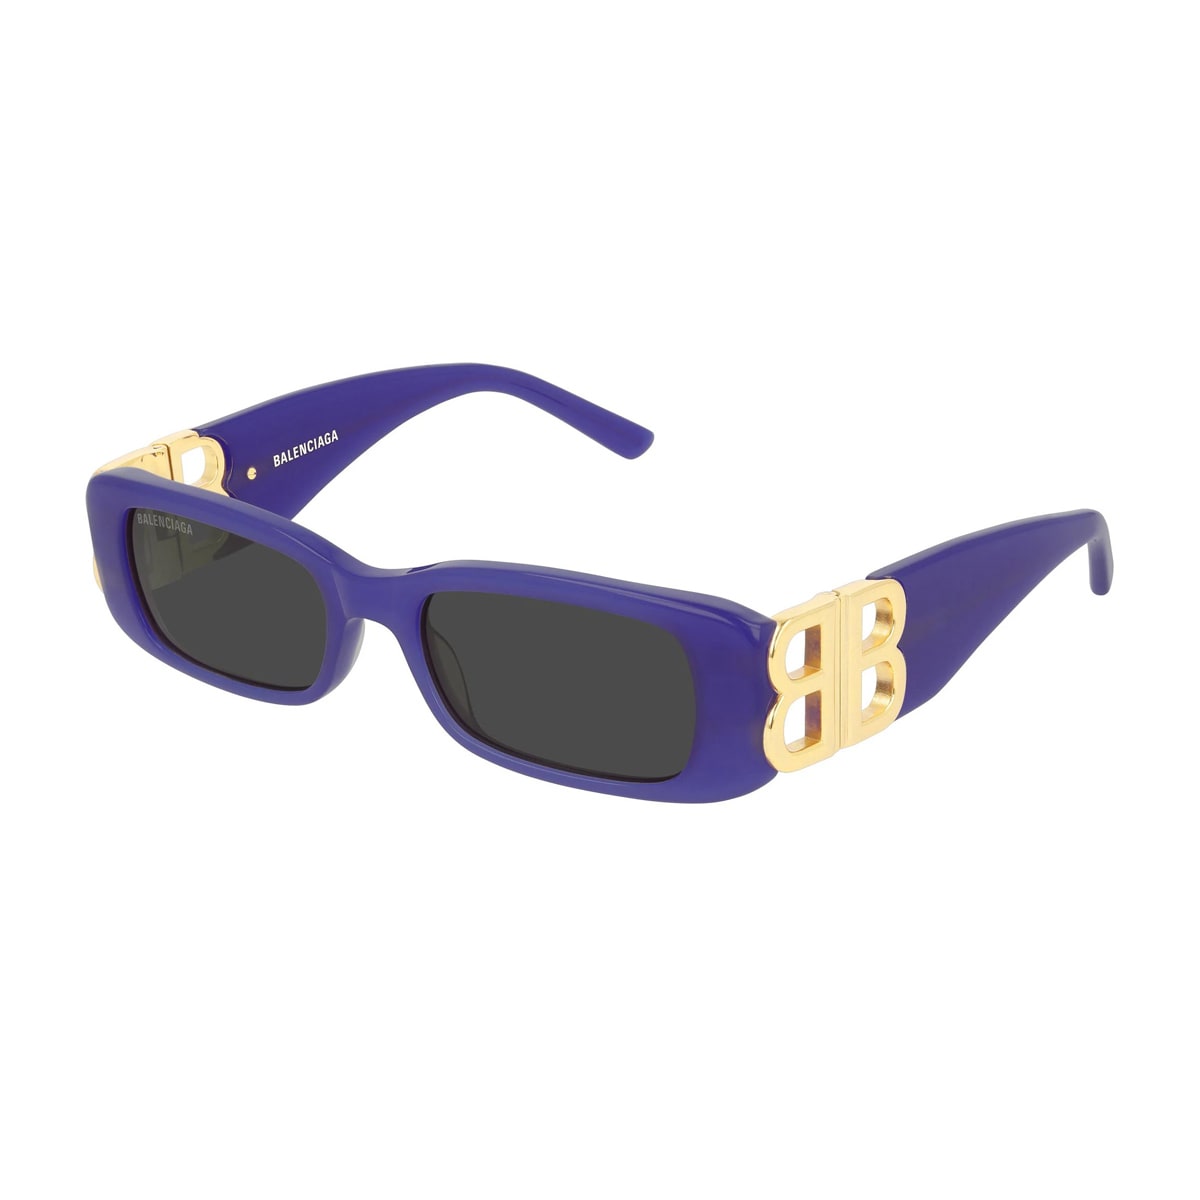 Balenciaga Eyewear Zks4140a - - Balenciaga Sunglasses